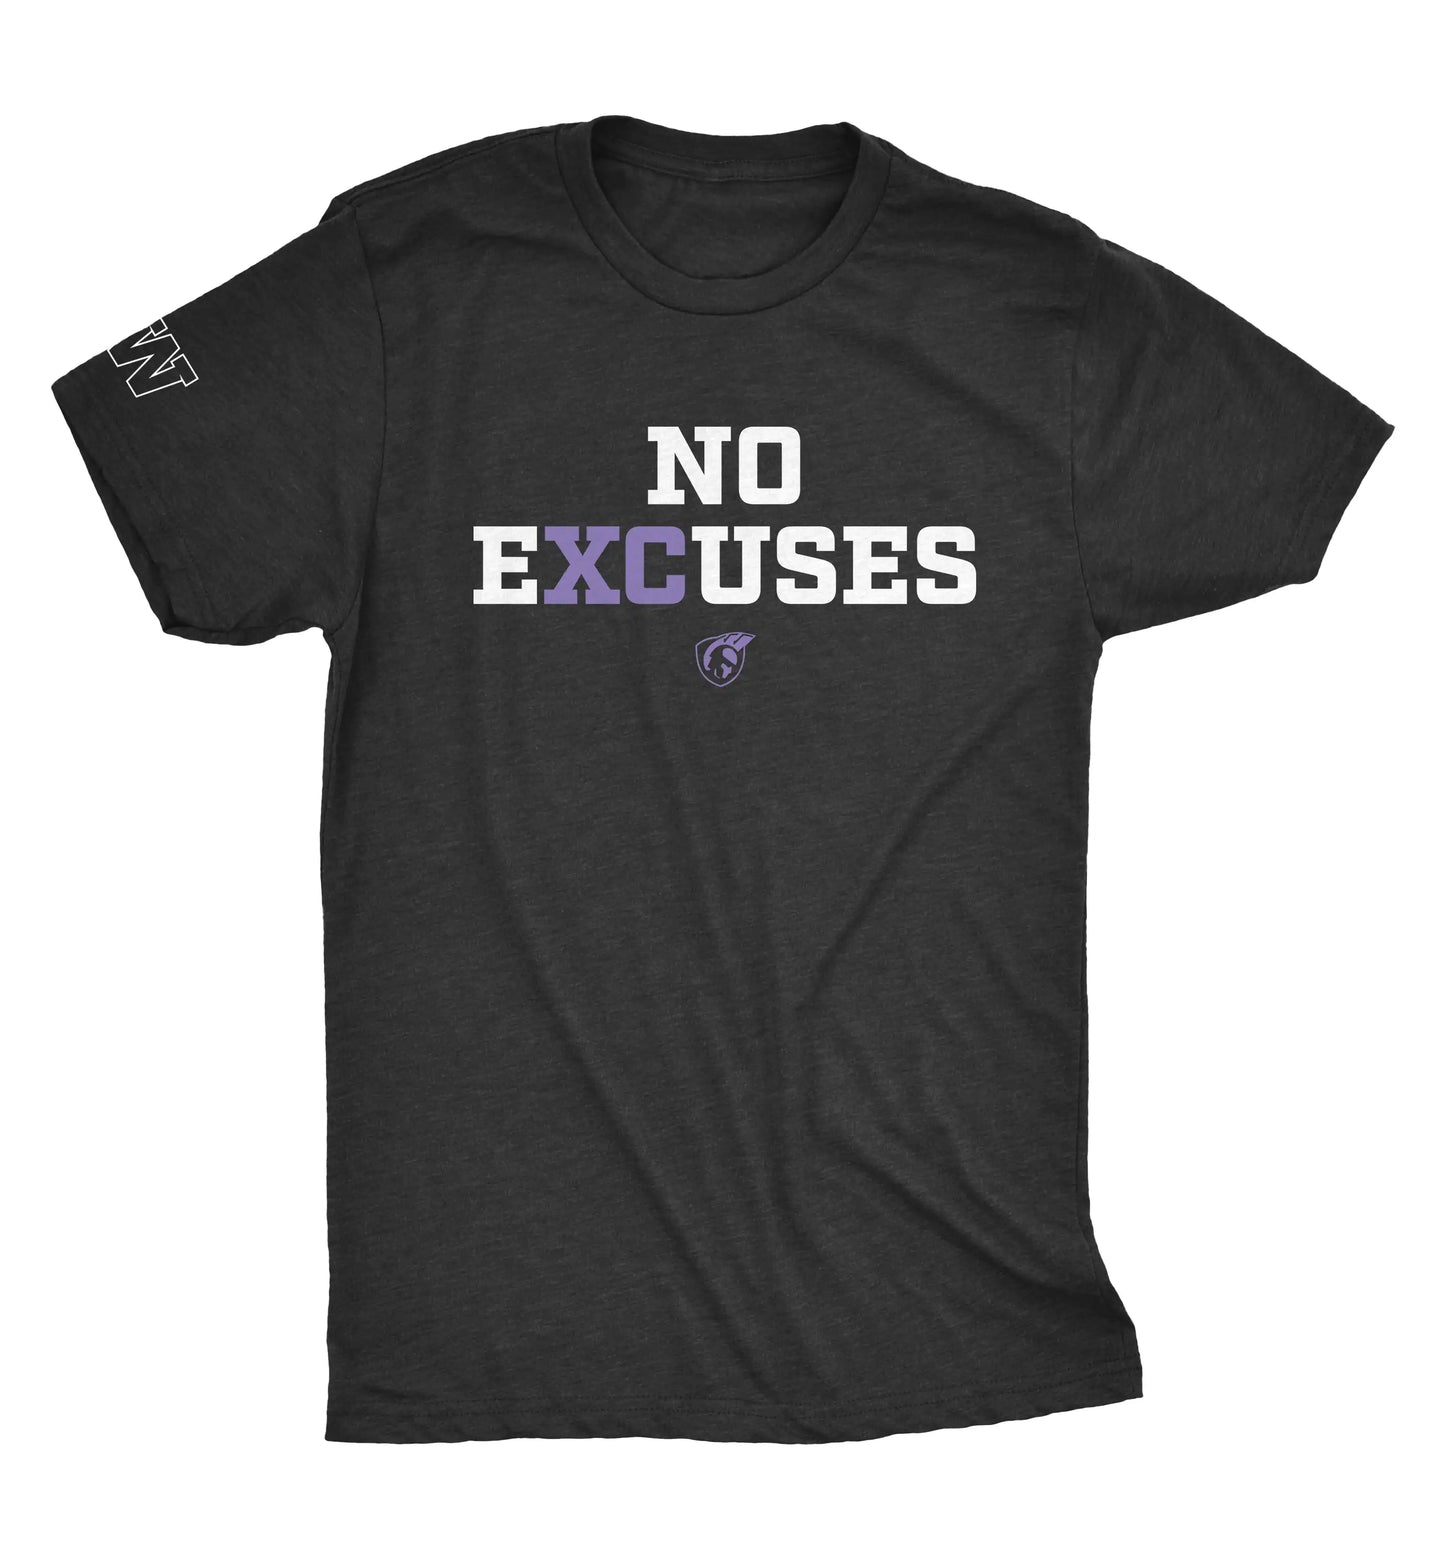 CROSS COUNTRY - No Excuses Tshirt